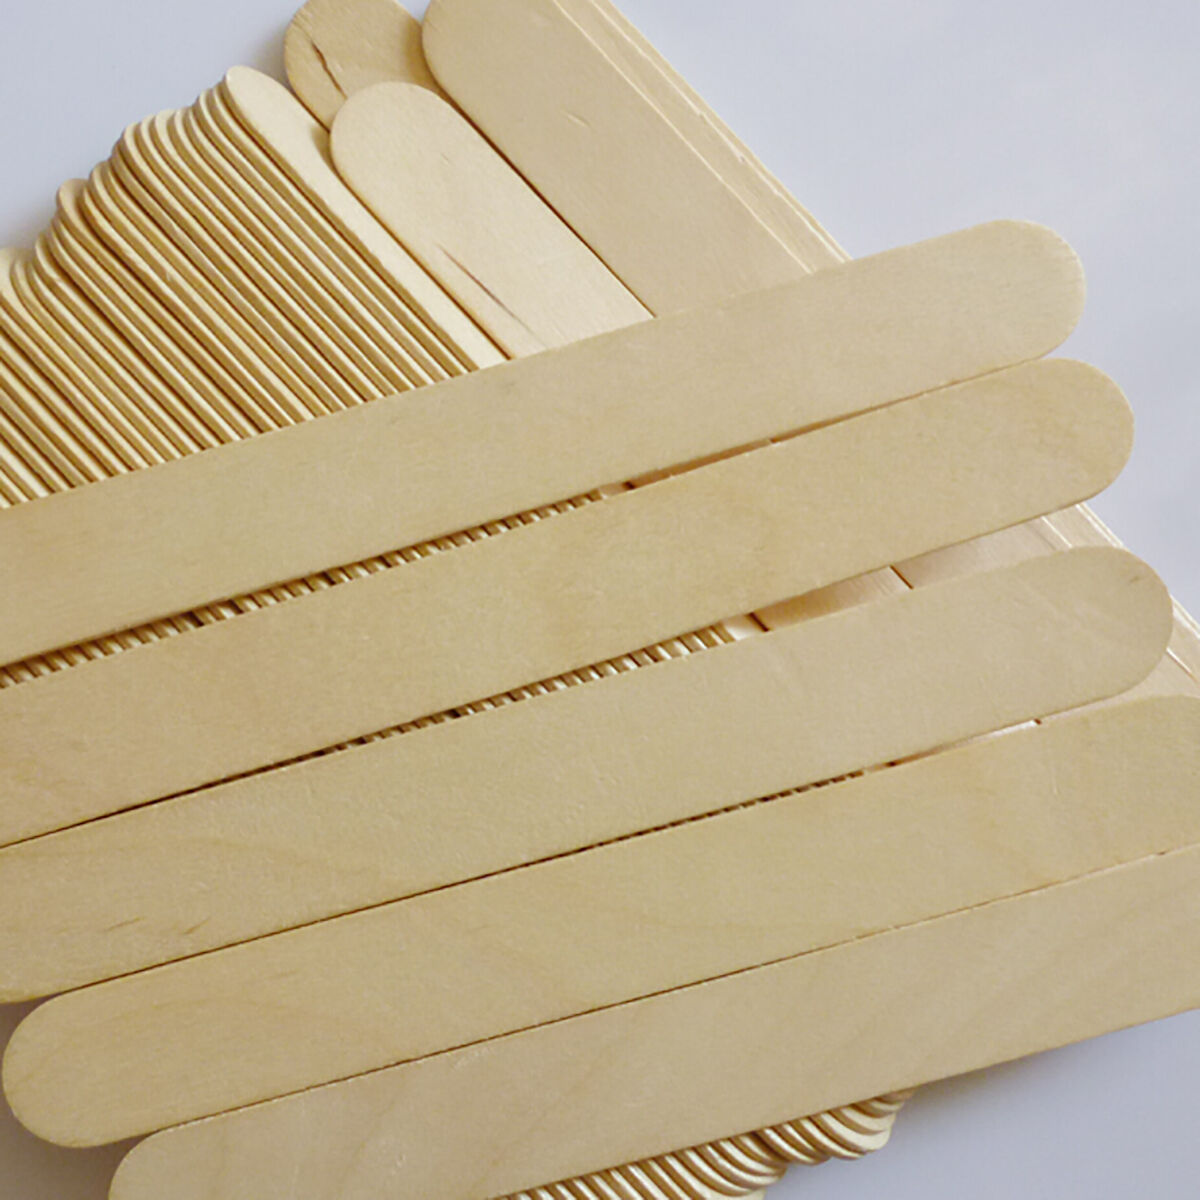 Large Wax Spatulas Waxing Hair Removal Wood Sticks  Applicators - 100 Pcs